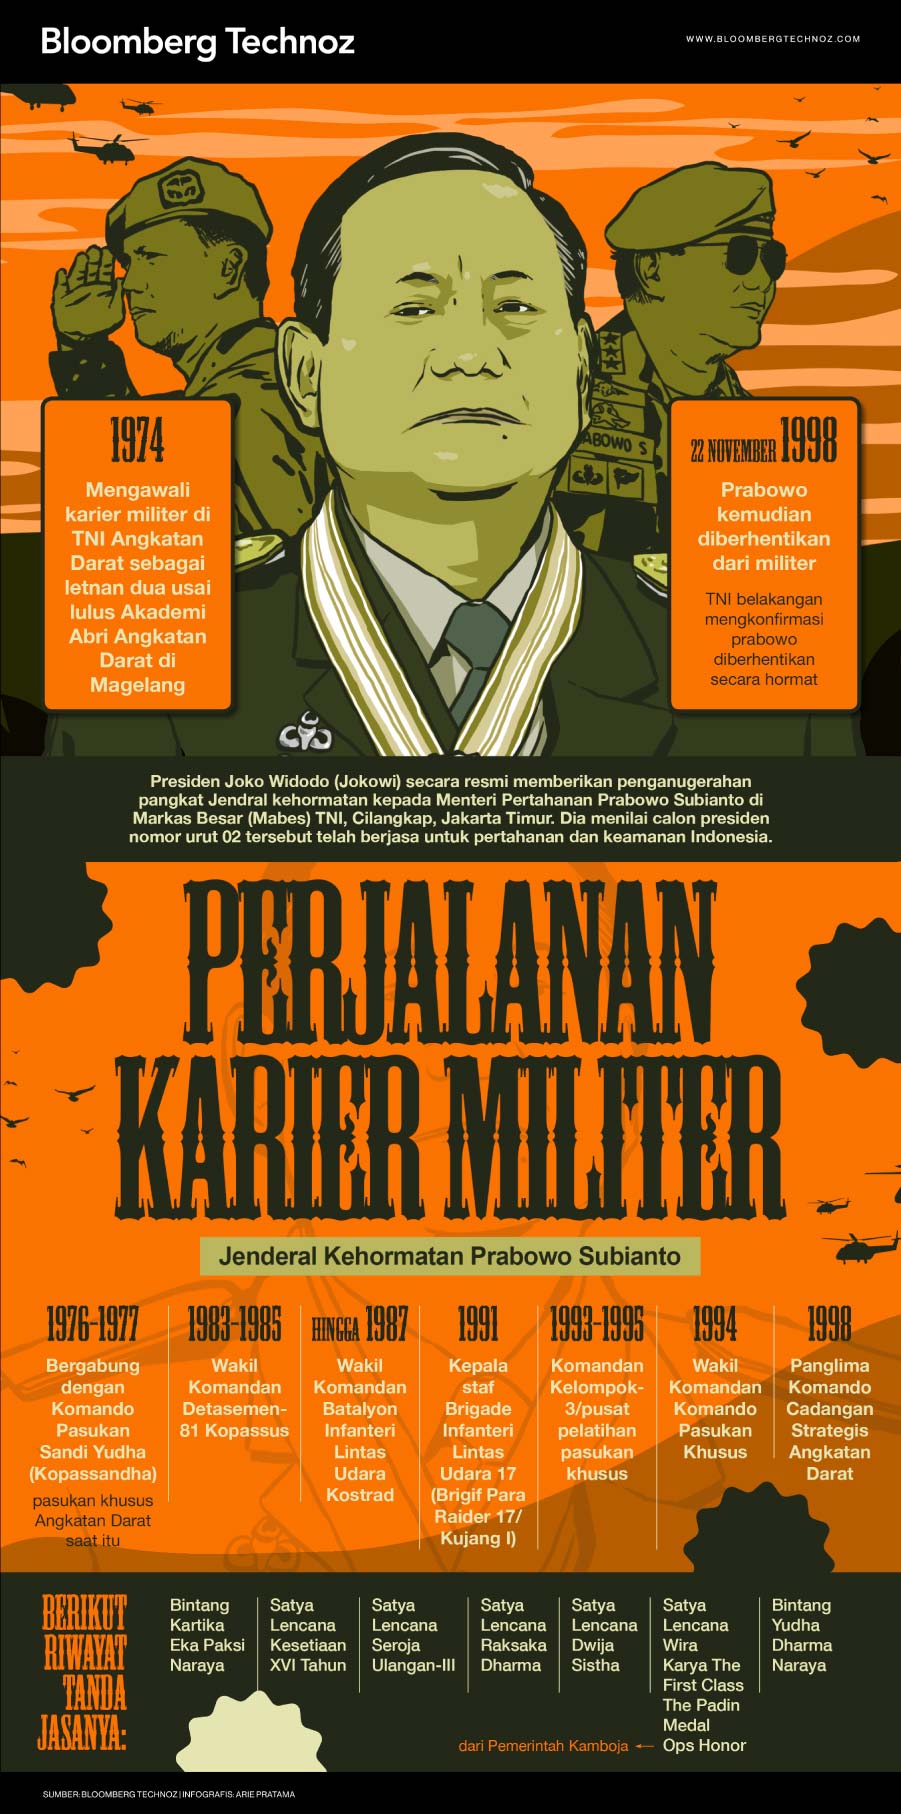 Infografis Perjalanan Karier Militer Jenderal Kehormatan Prabowo Subianto (Arie Pratama/Bloomberg Technoz)